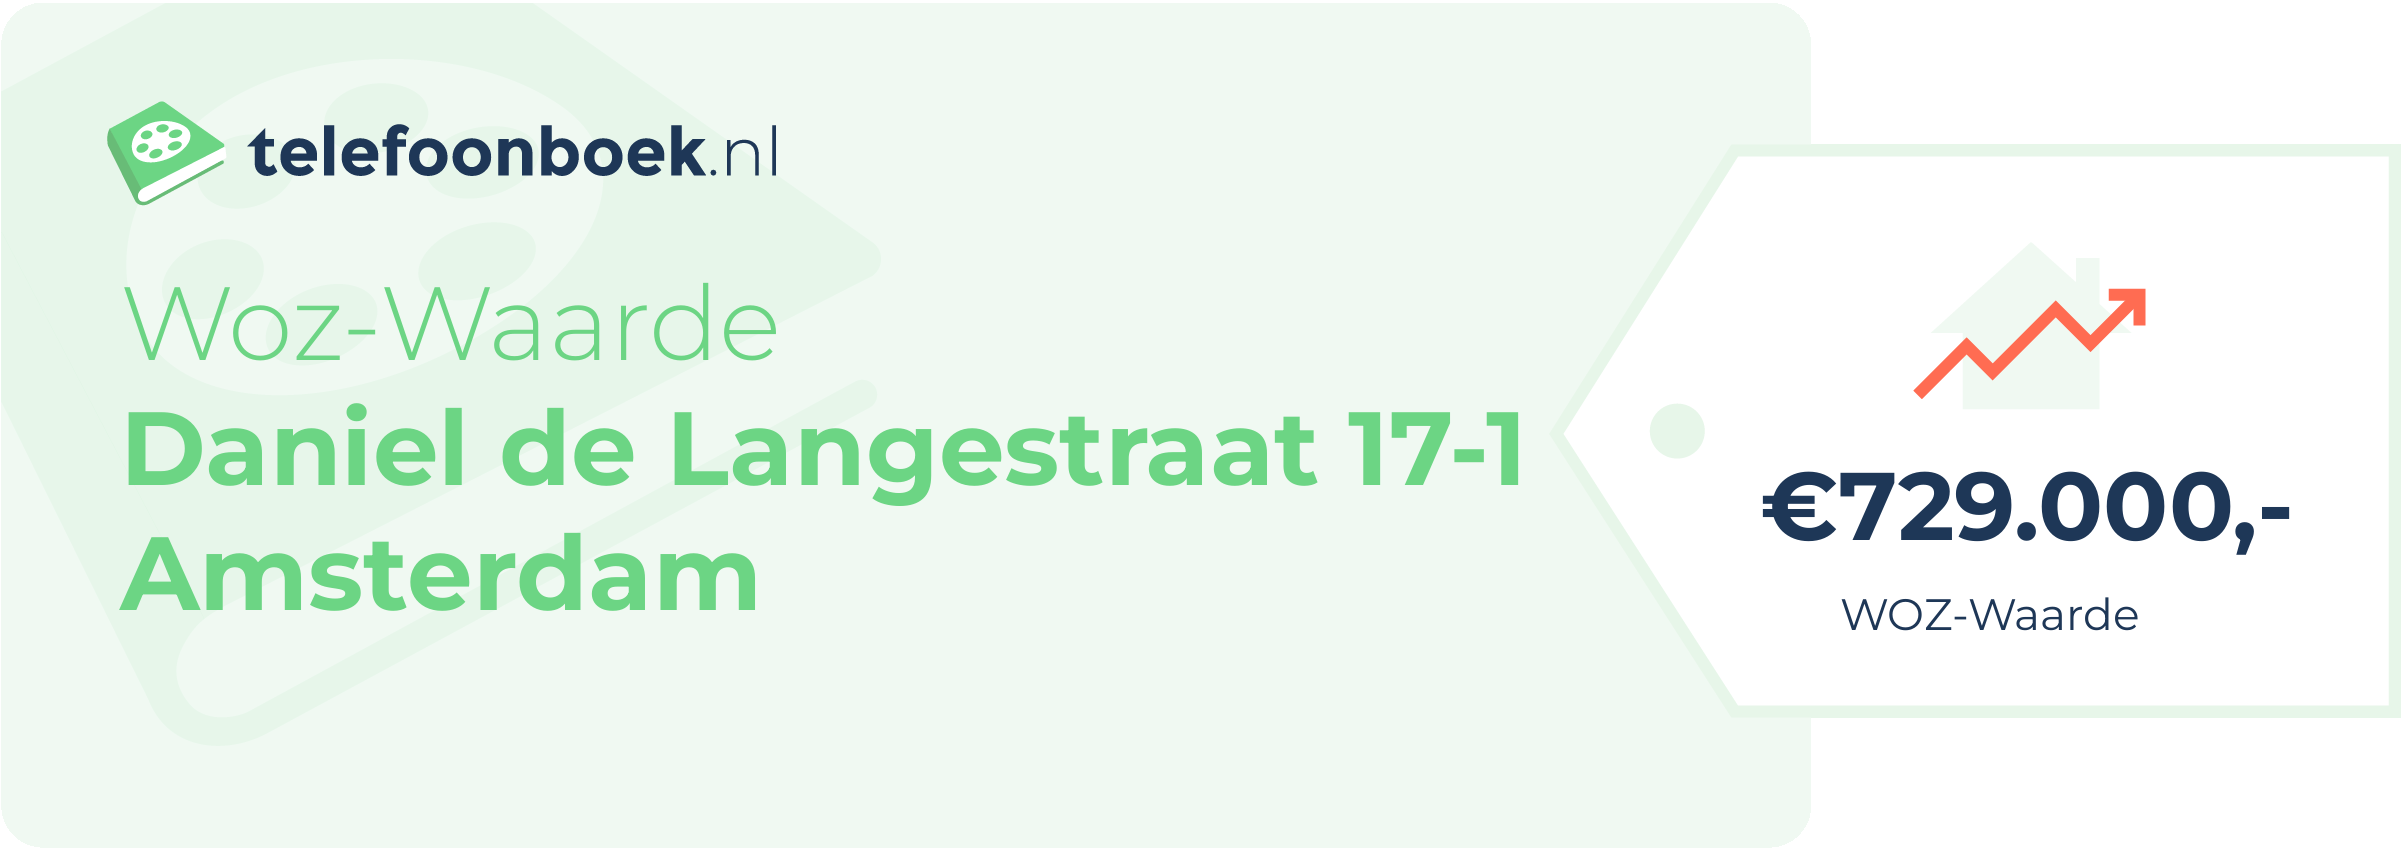 WOZ-waarde Daniel De Langestraat 17-1 Amsterdam